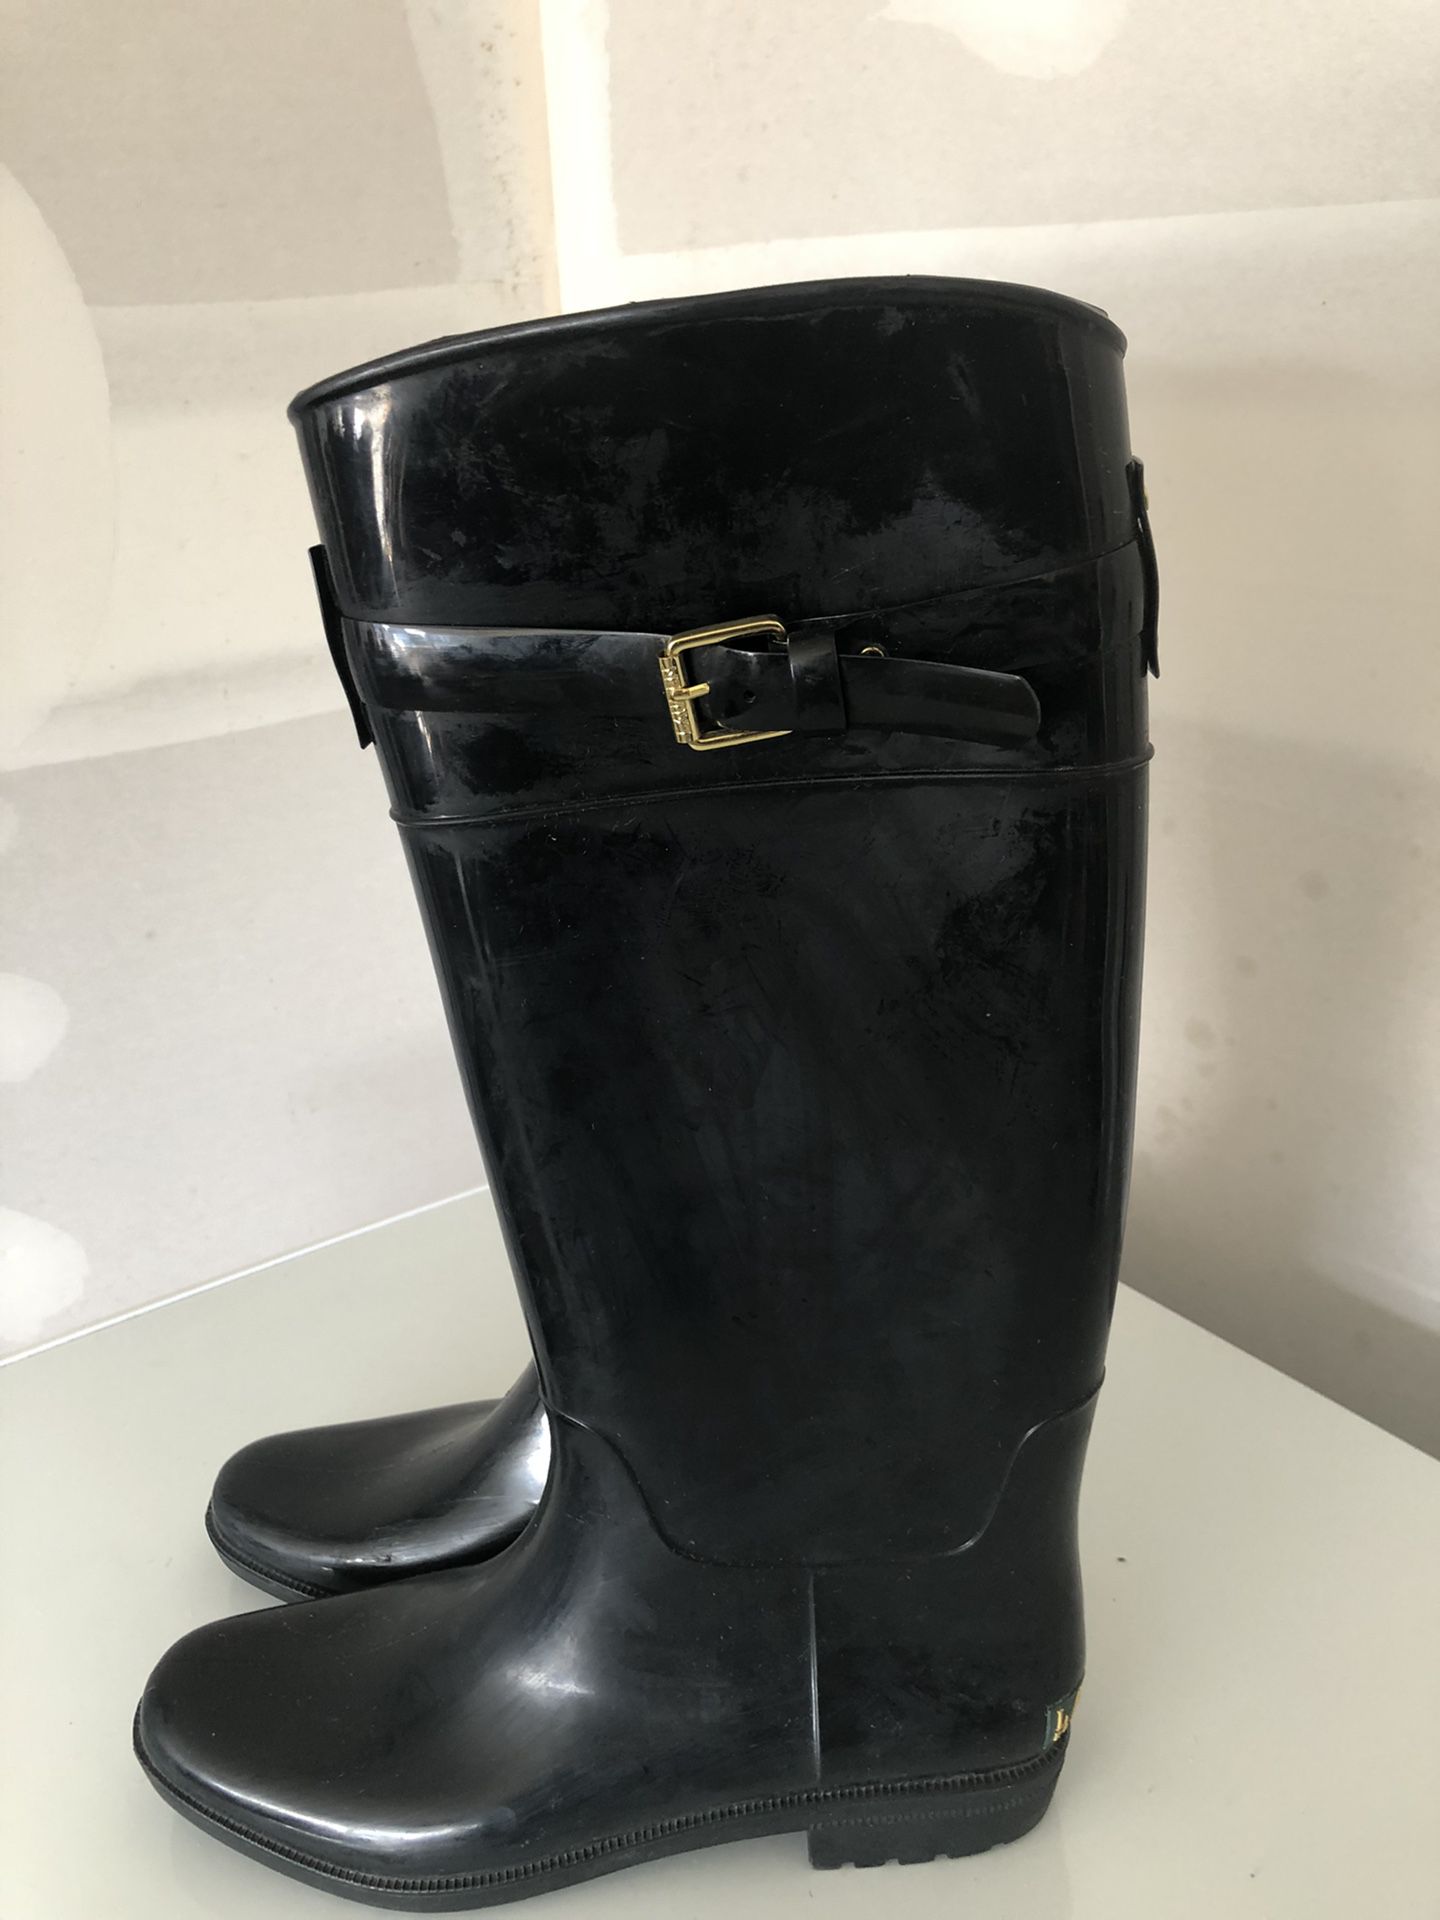 Laurent Ralph Rain Boot Size 11b